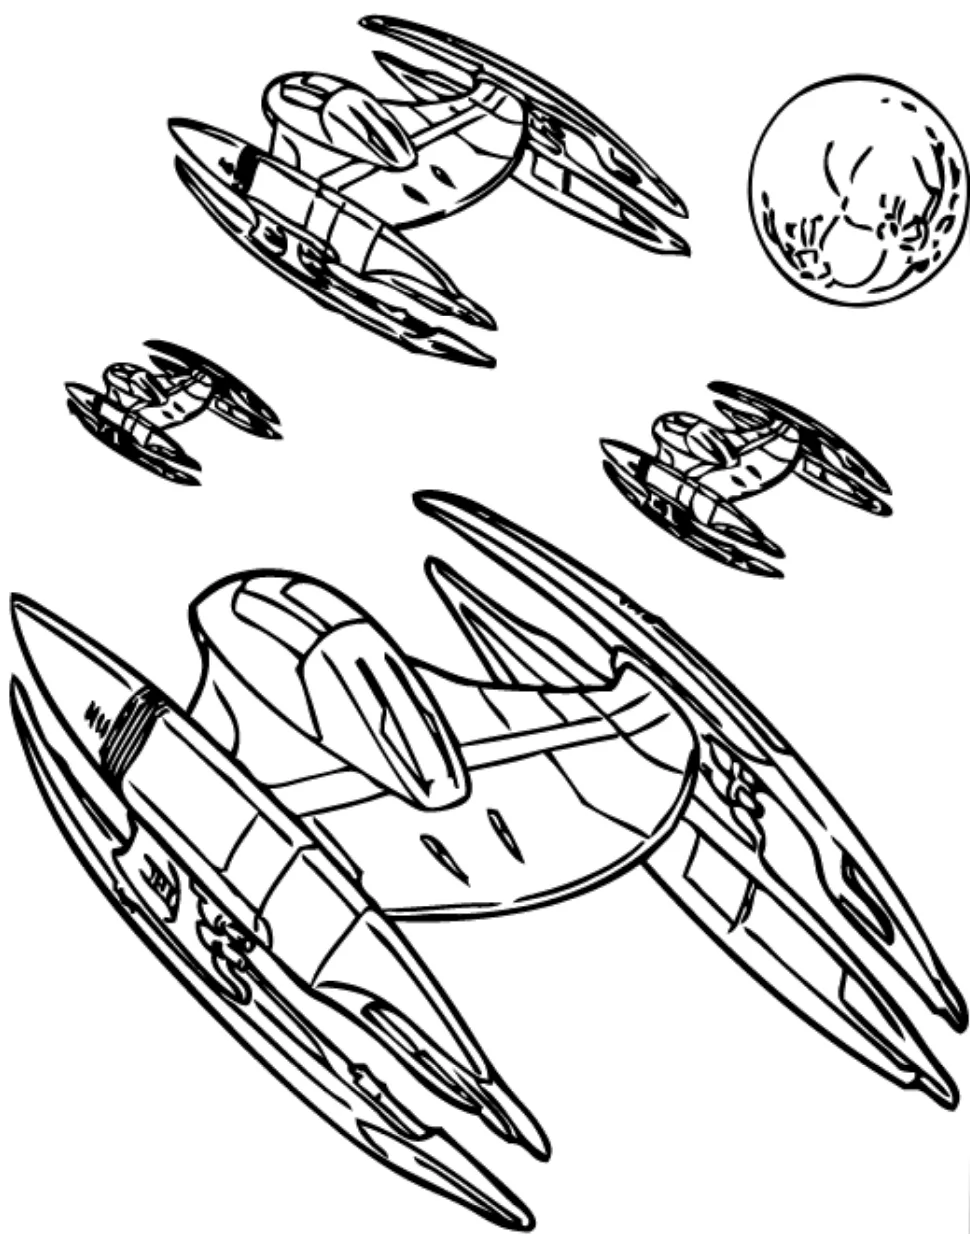 Trade Federation Spaceships